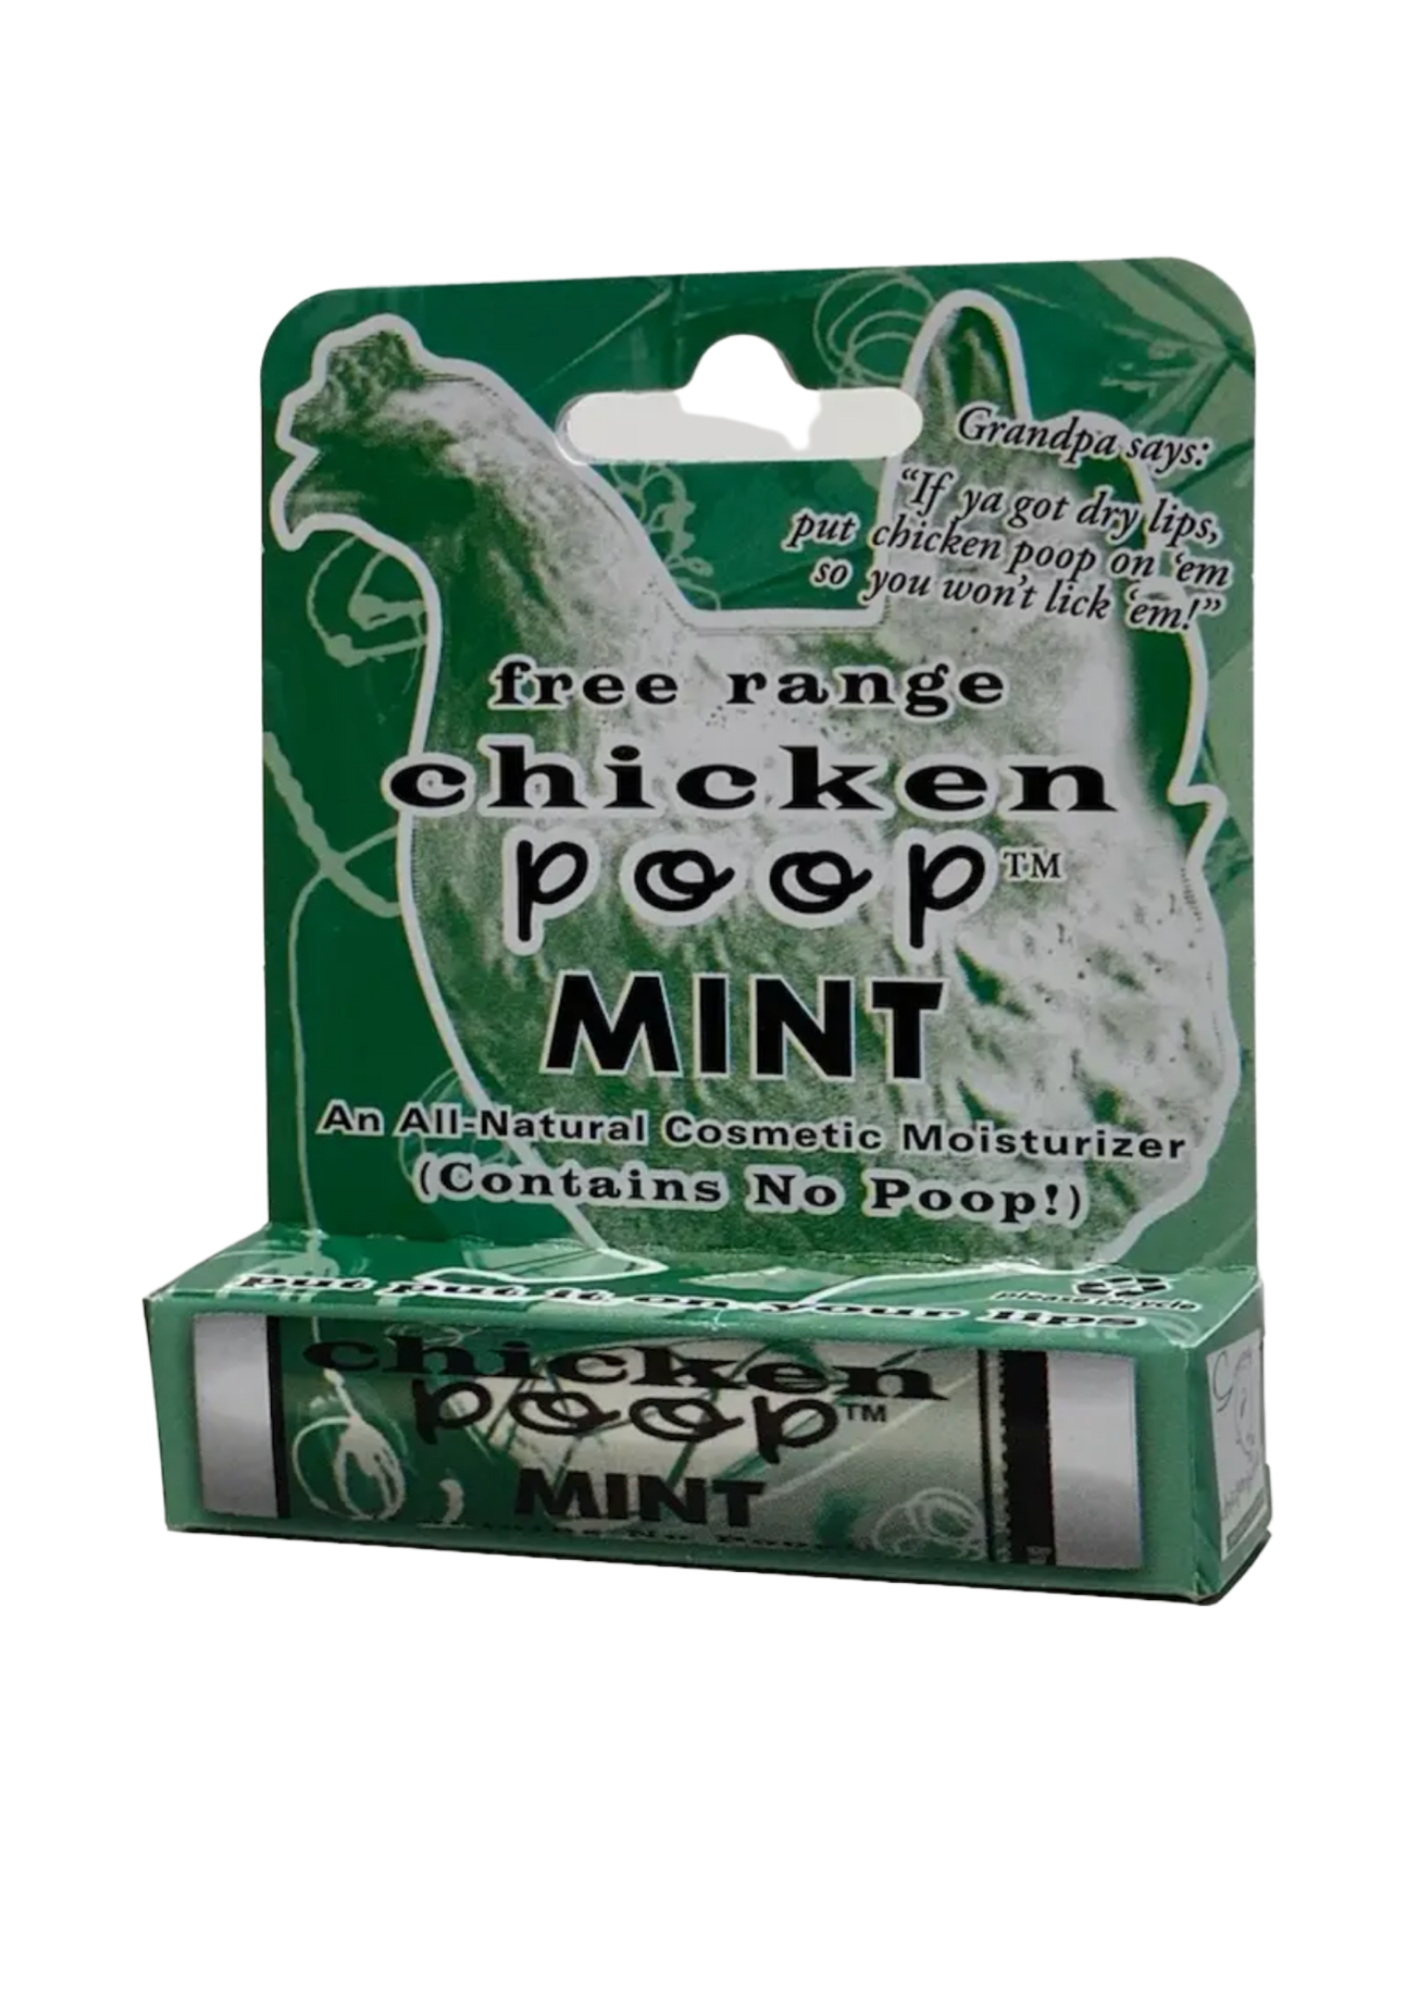 Mint Chicken Poop Chap Stick